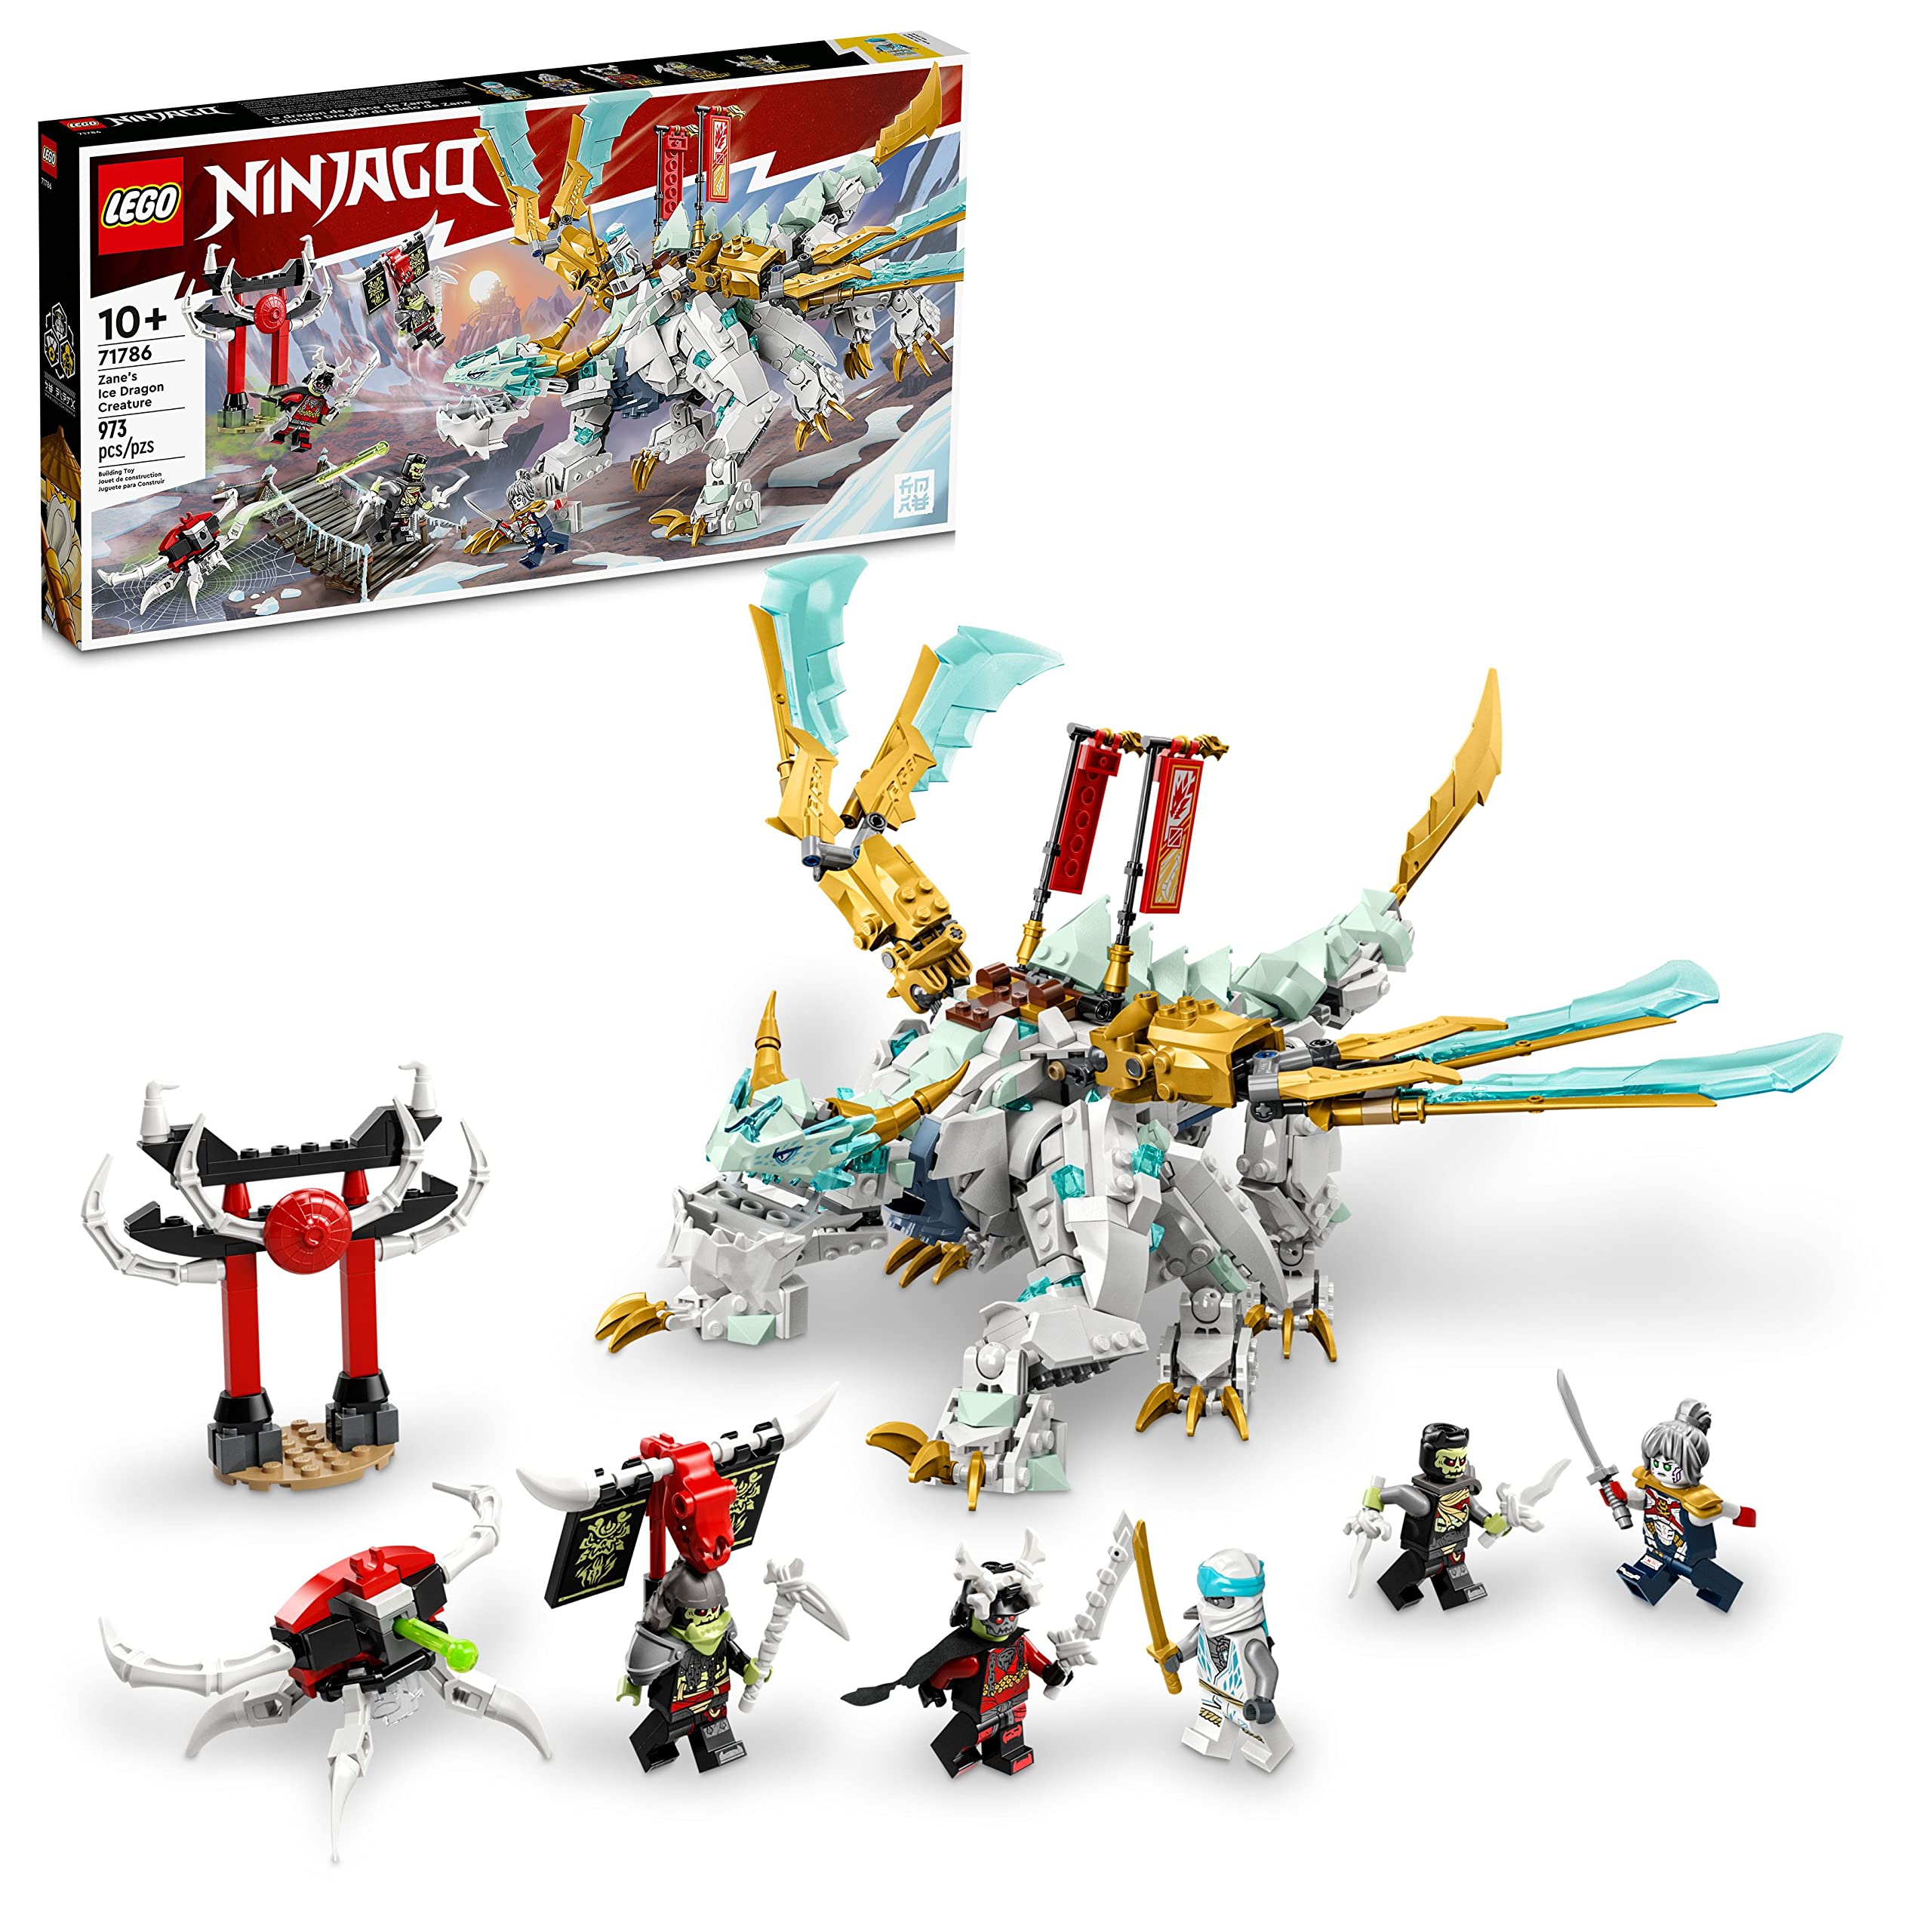 973-Pieces LEGO NINJAGO Zane’s Ice Dragon Creature 71786, 2in1 Dragon Toy - 5 Minifigures $89.99 + Free Shipping